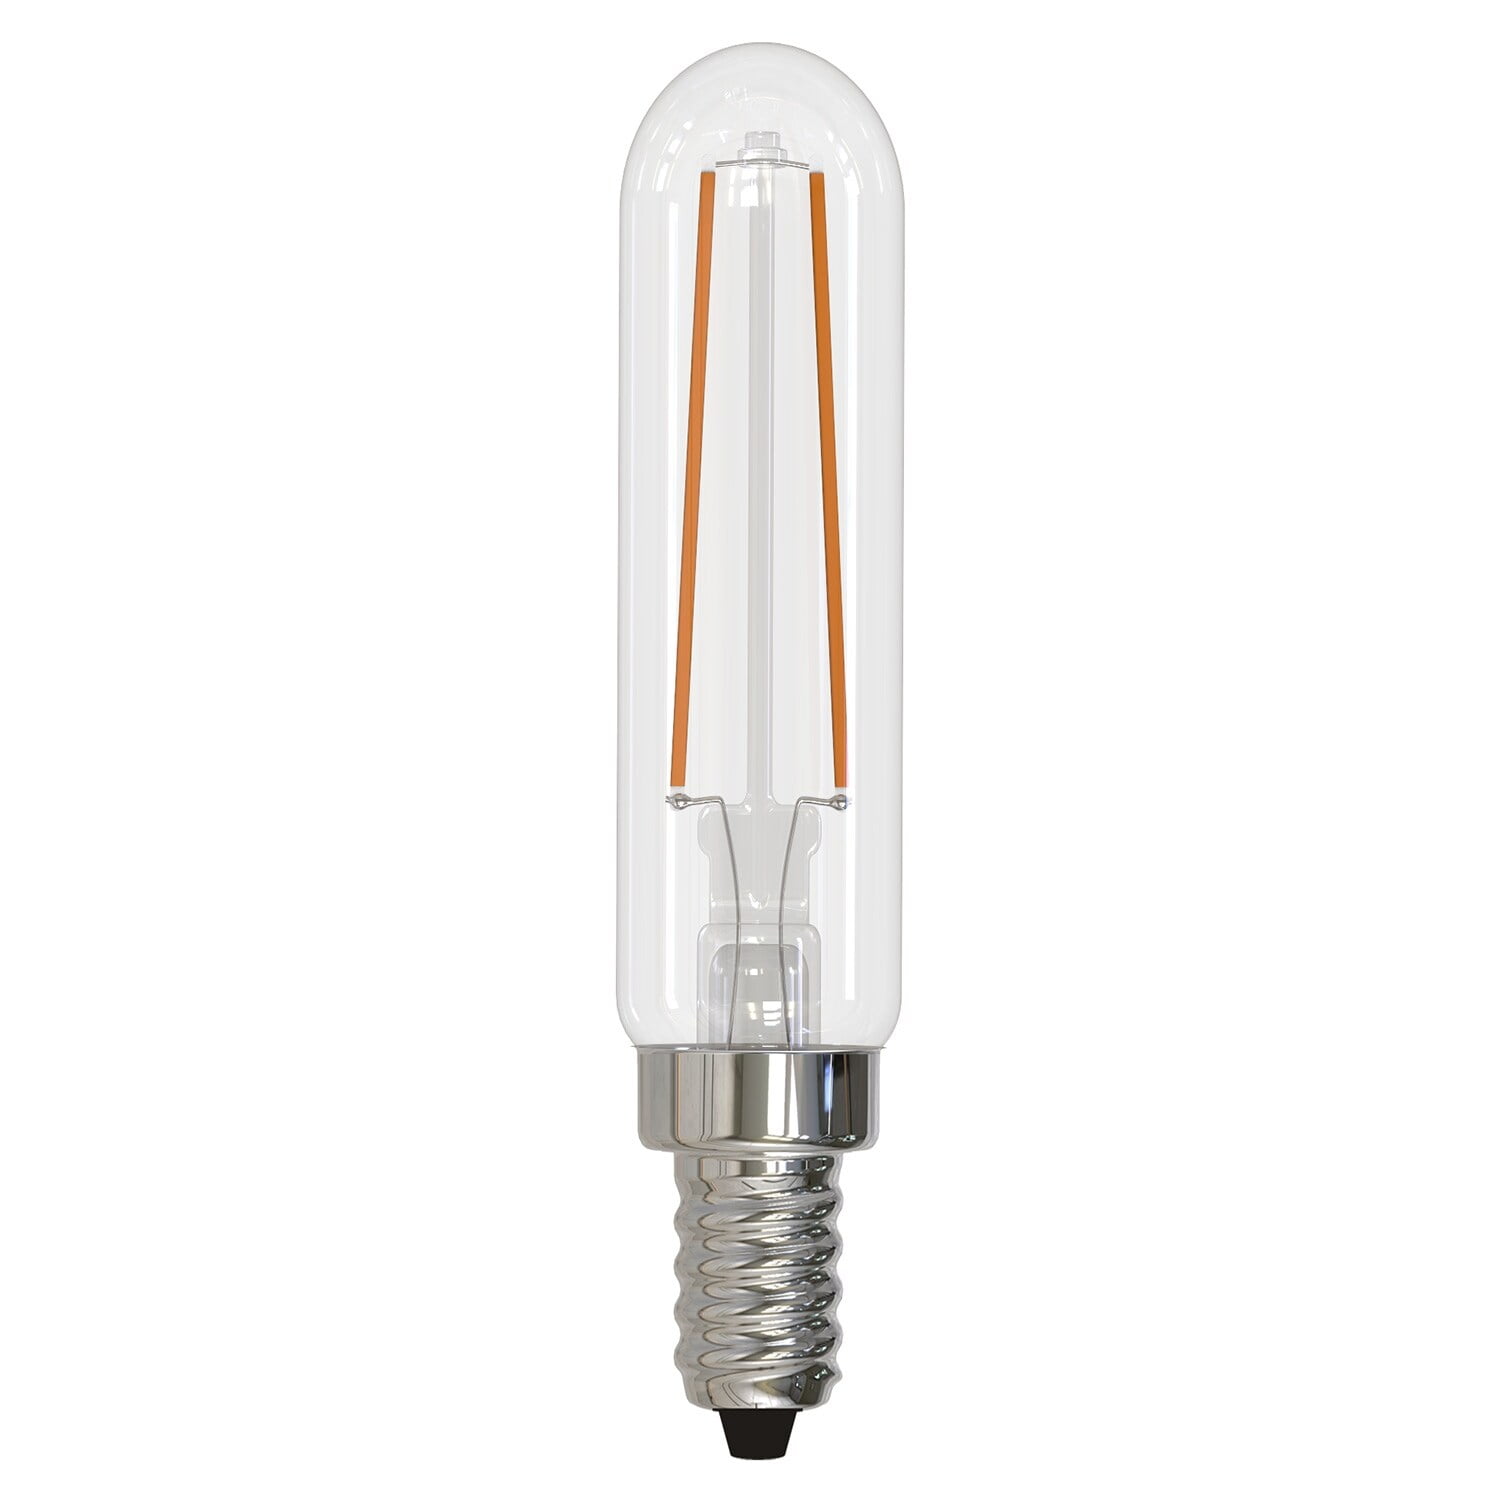 Picture of Bulbrite Pack of (4) 2.5 Watt Dimmable Clear T6 LED Light Bulbs with Candelabra (E12) Base  3000K Soft White Light  180 Lumens